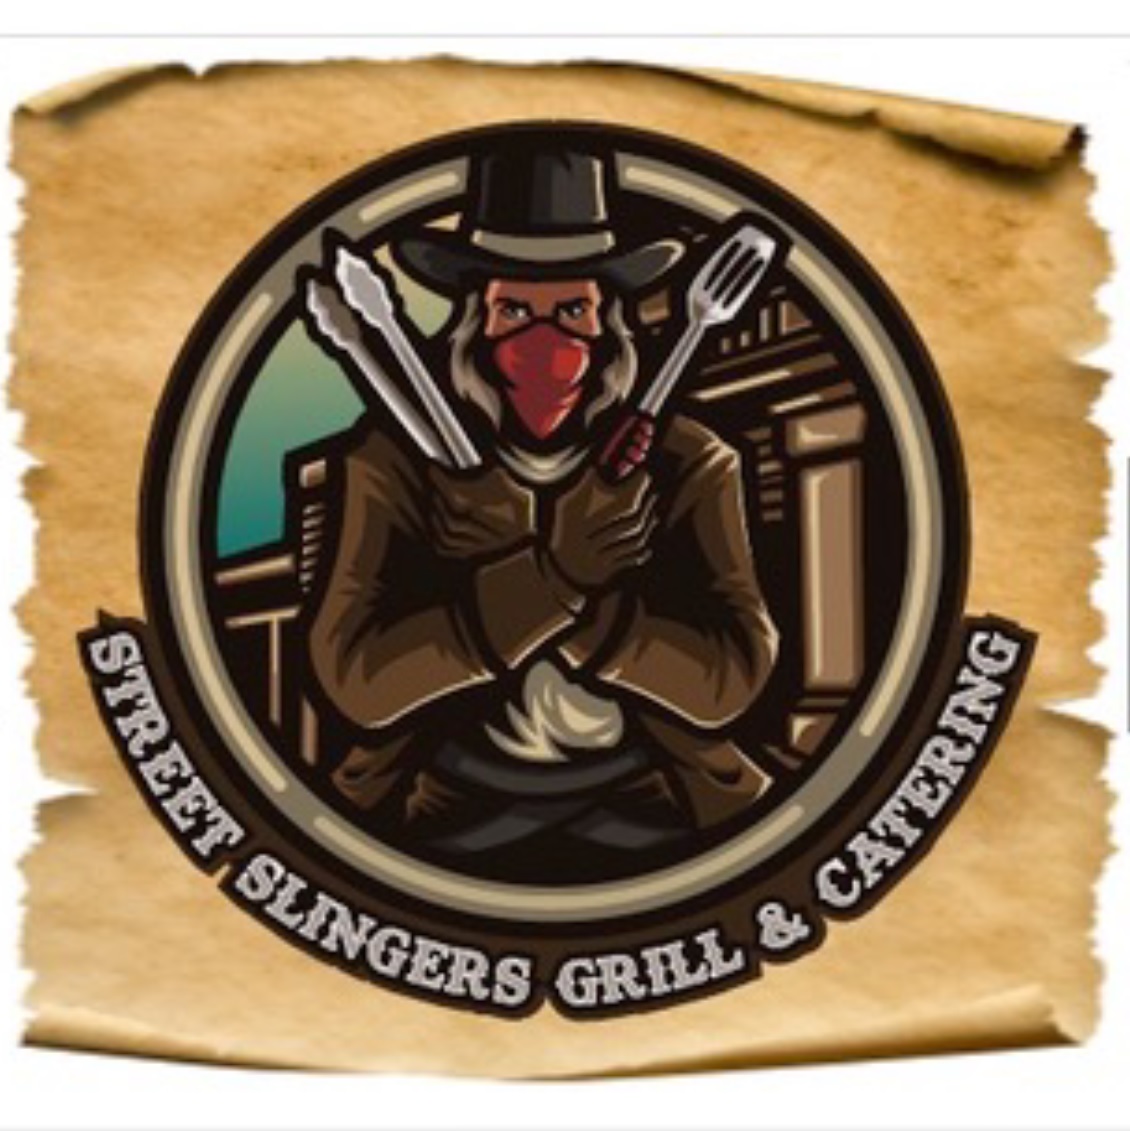 Street Slingers Grill food truck profile image